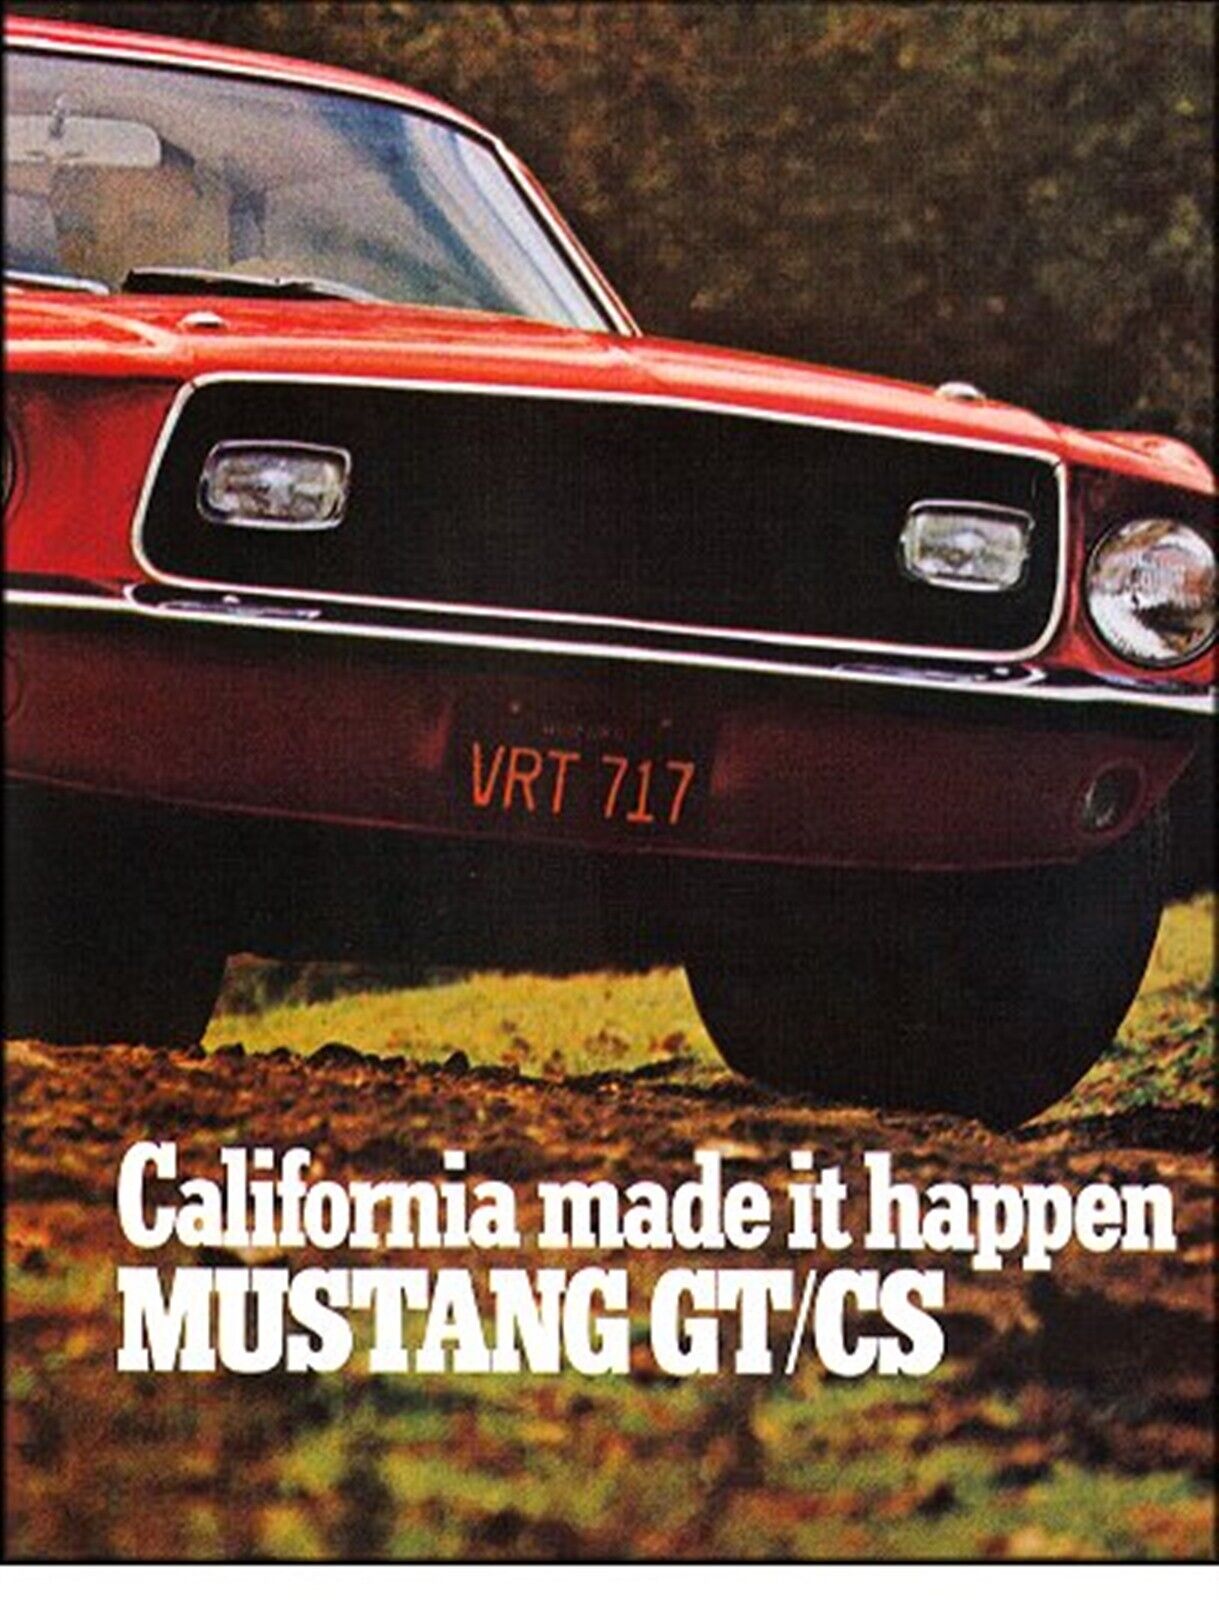 1968 Mustang GT/CS California Special Sales Brochure